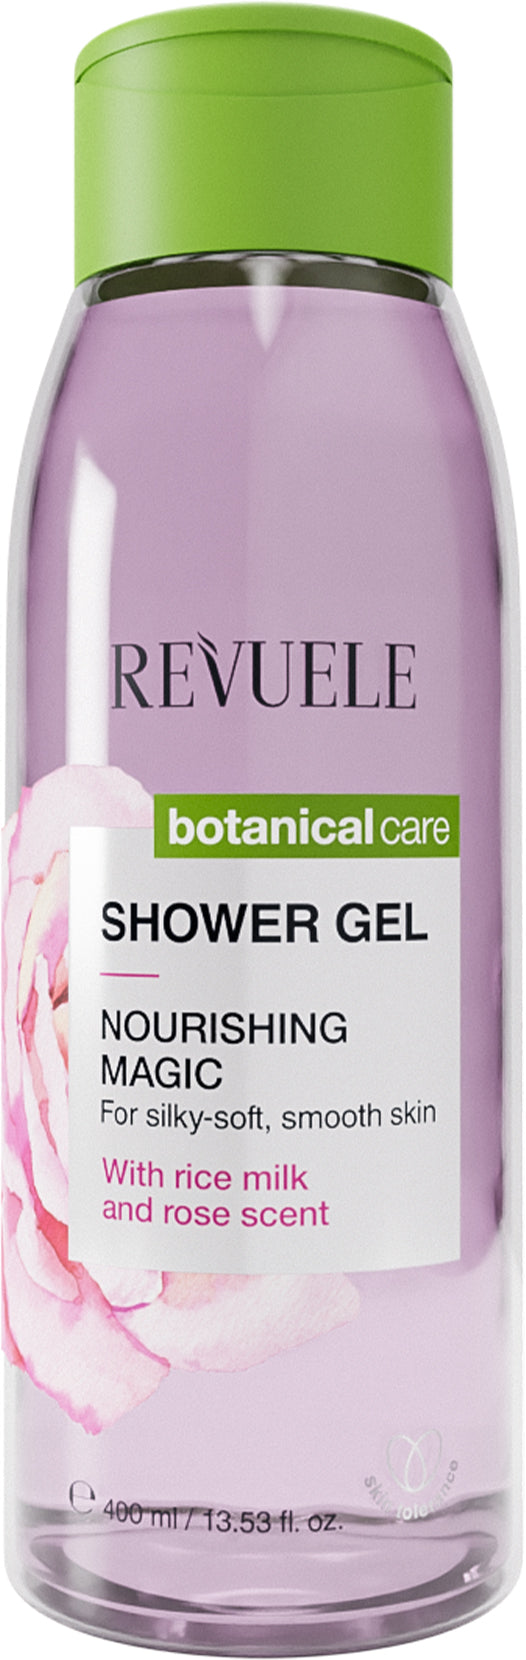 Revuele Shower Gel Nourishing Magic 400Ml